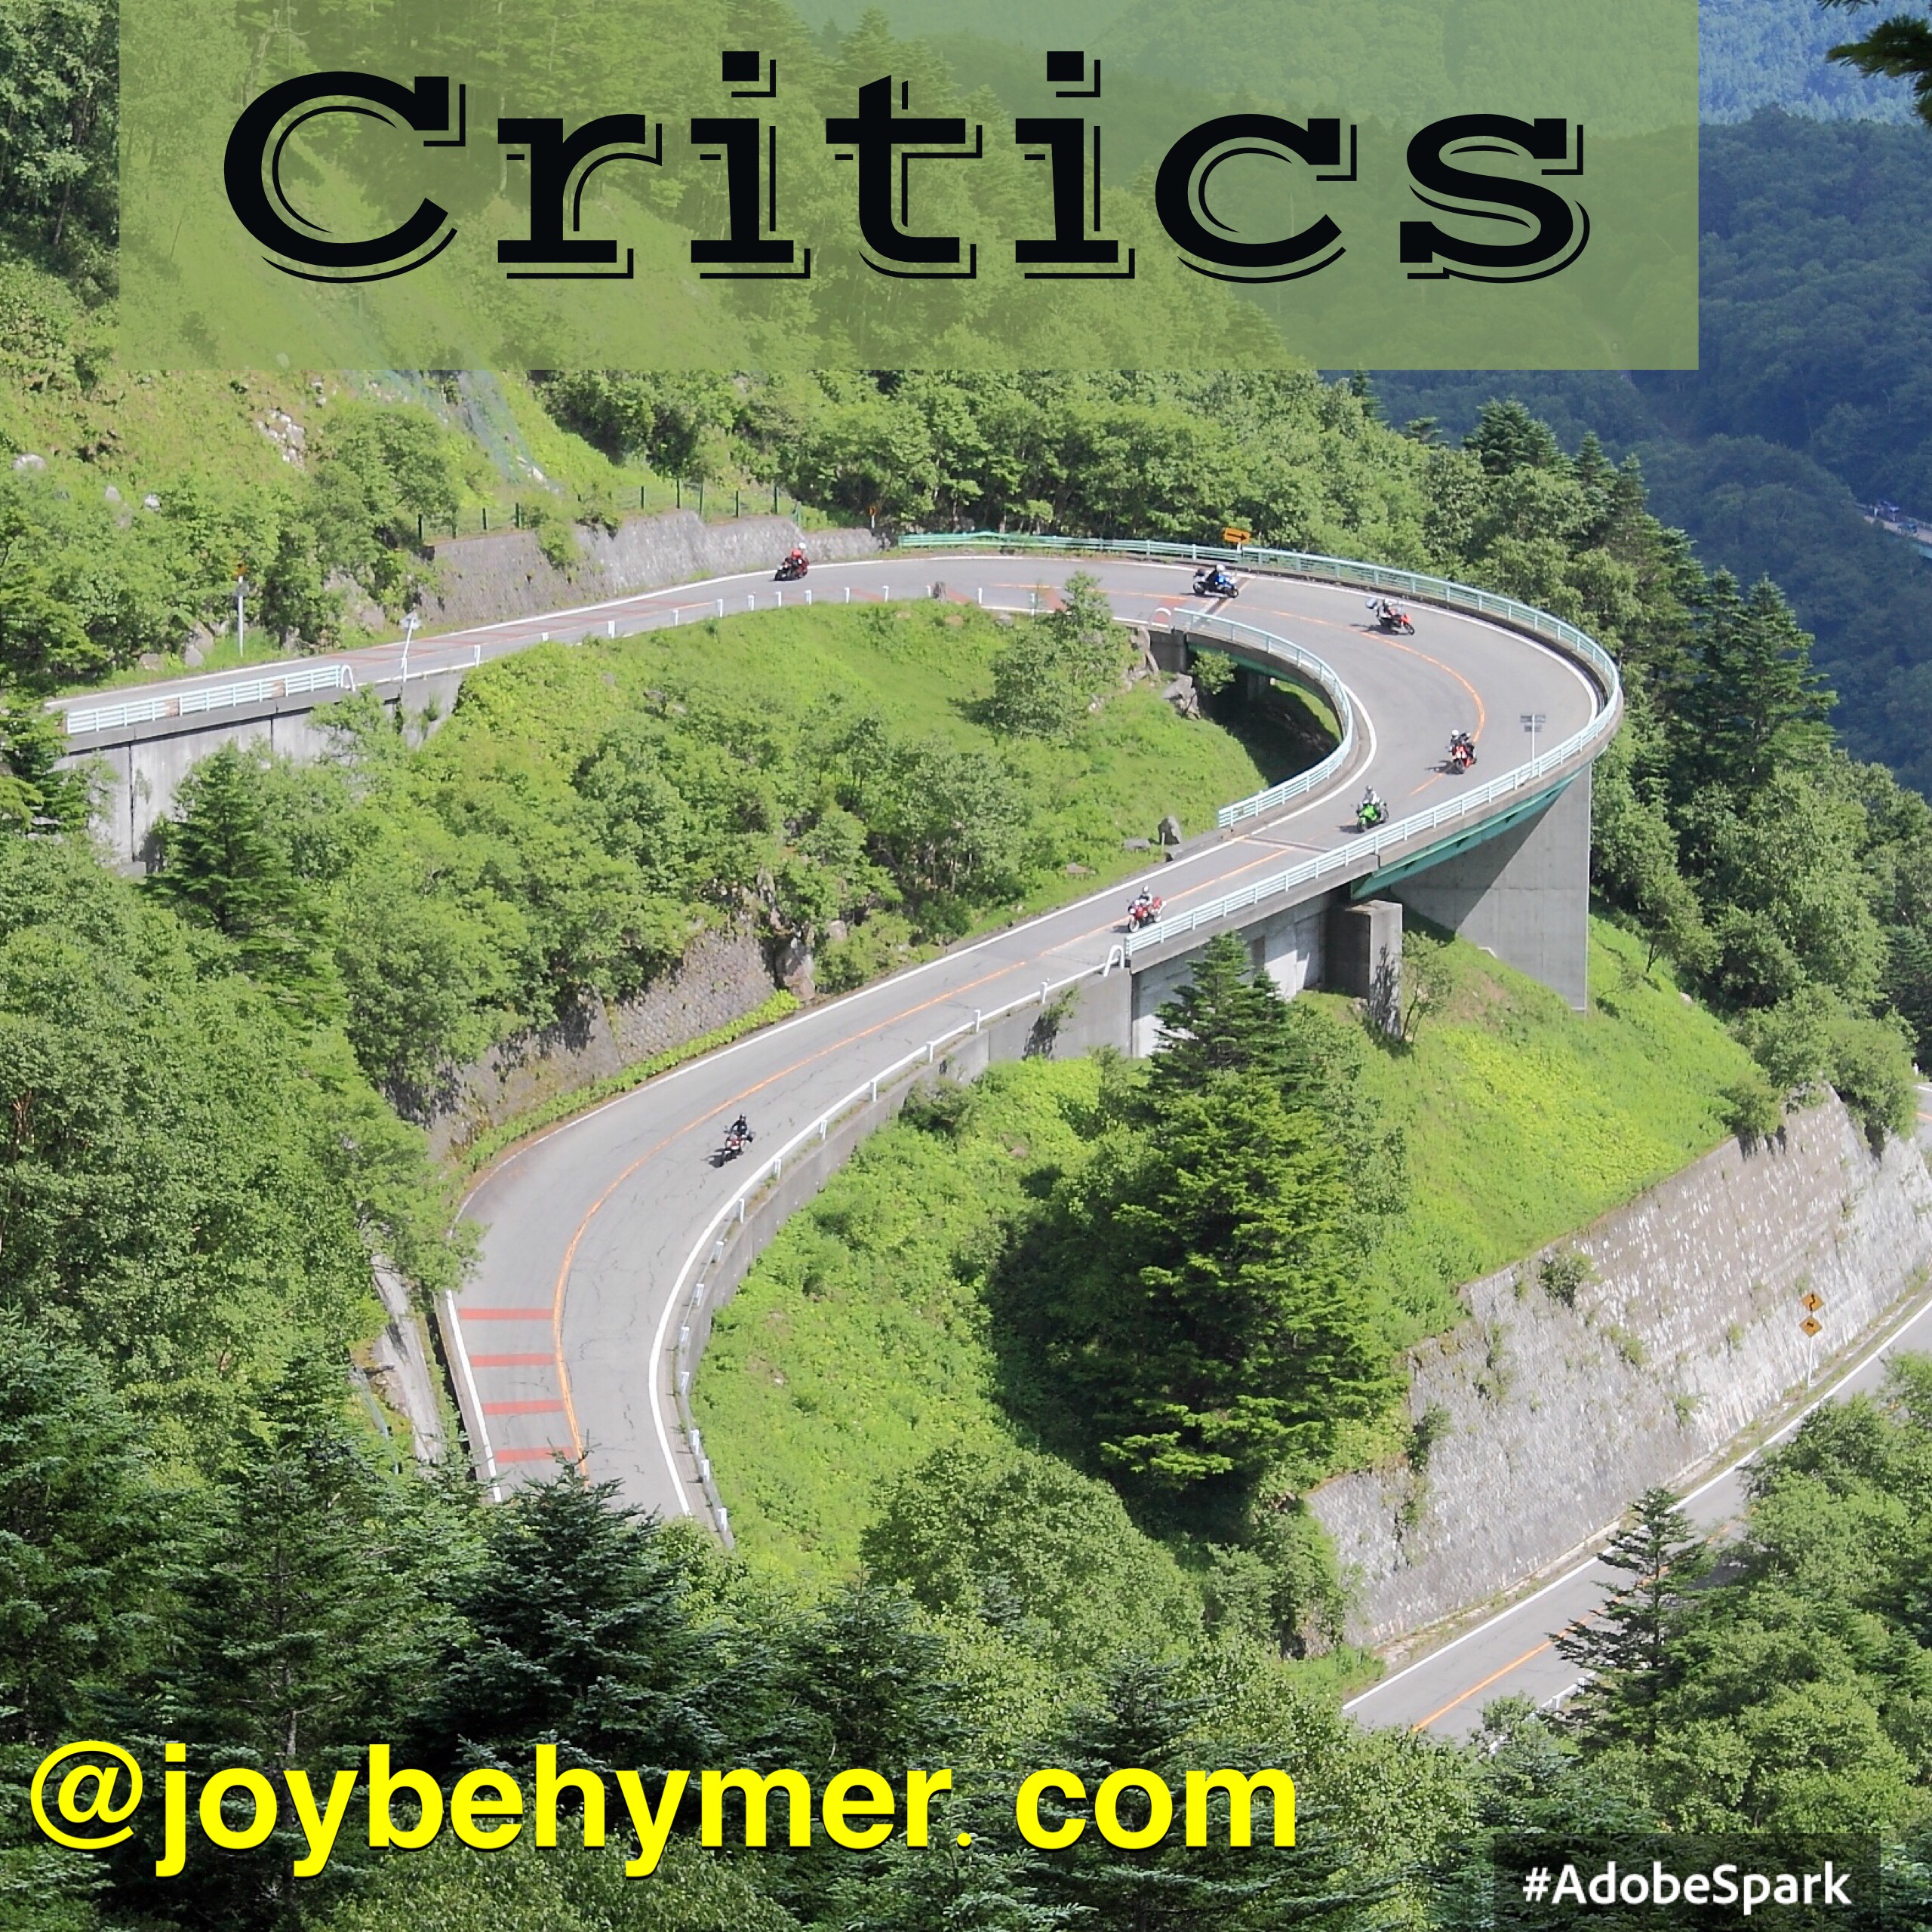 Critics